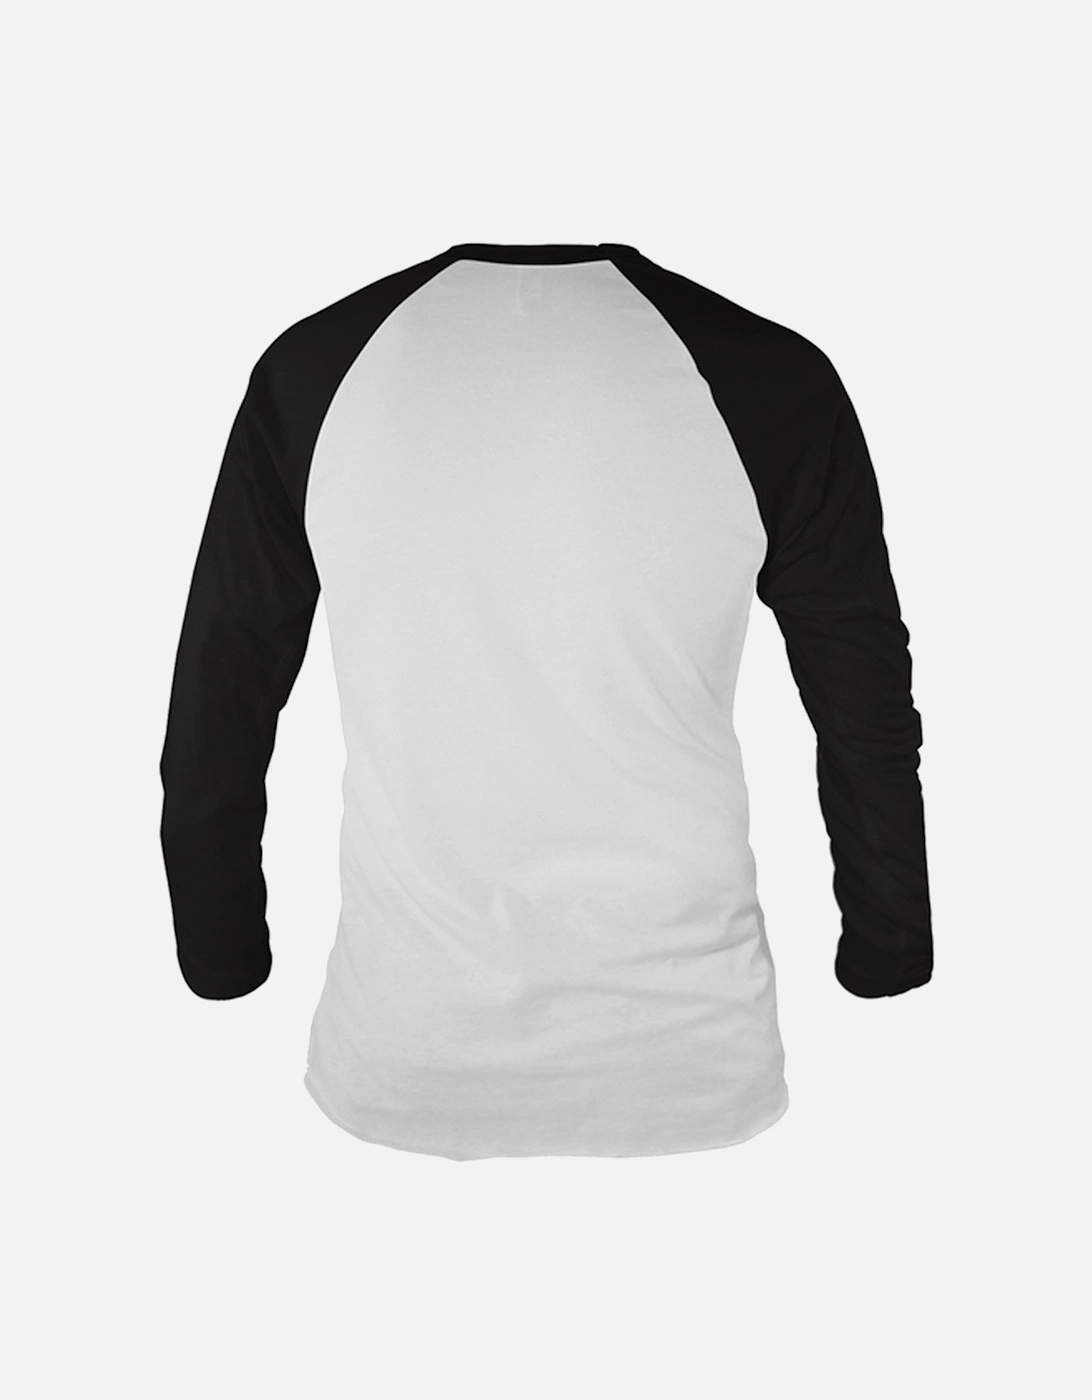 Unisex Adult Logo Long-Sleeved T-Shirt